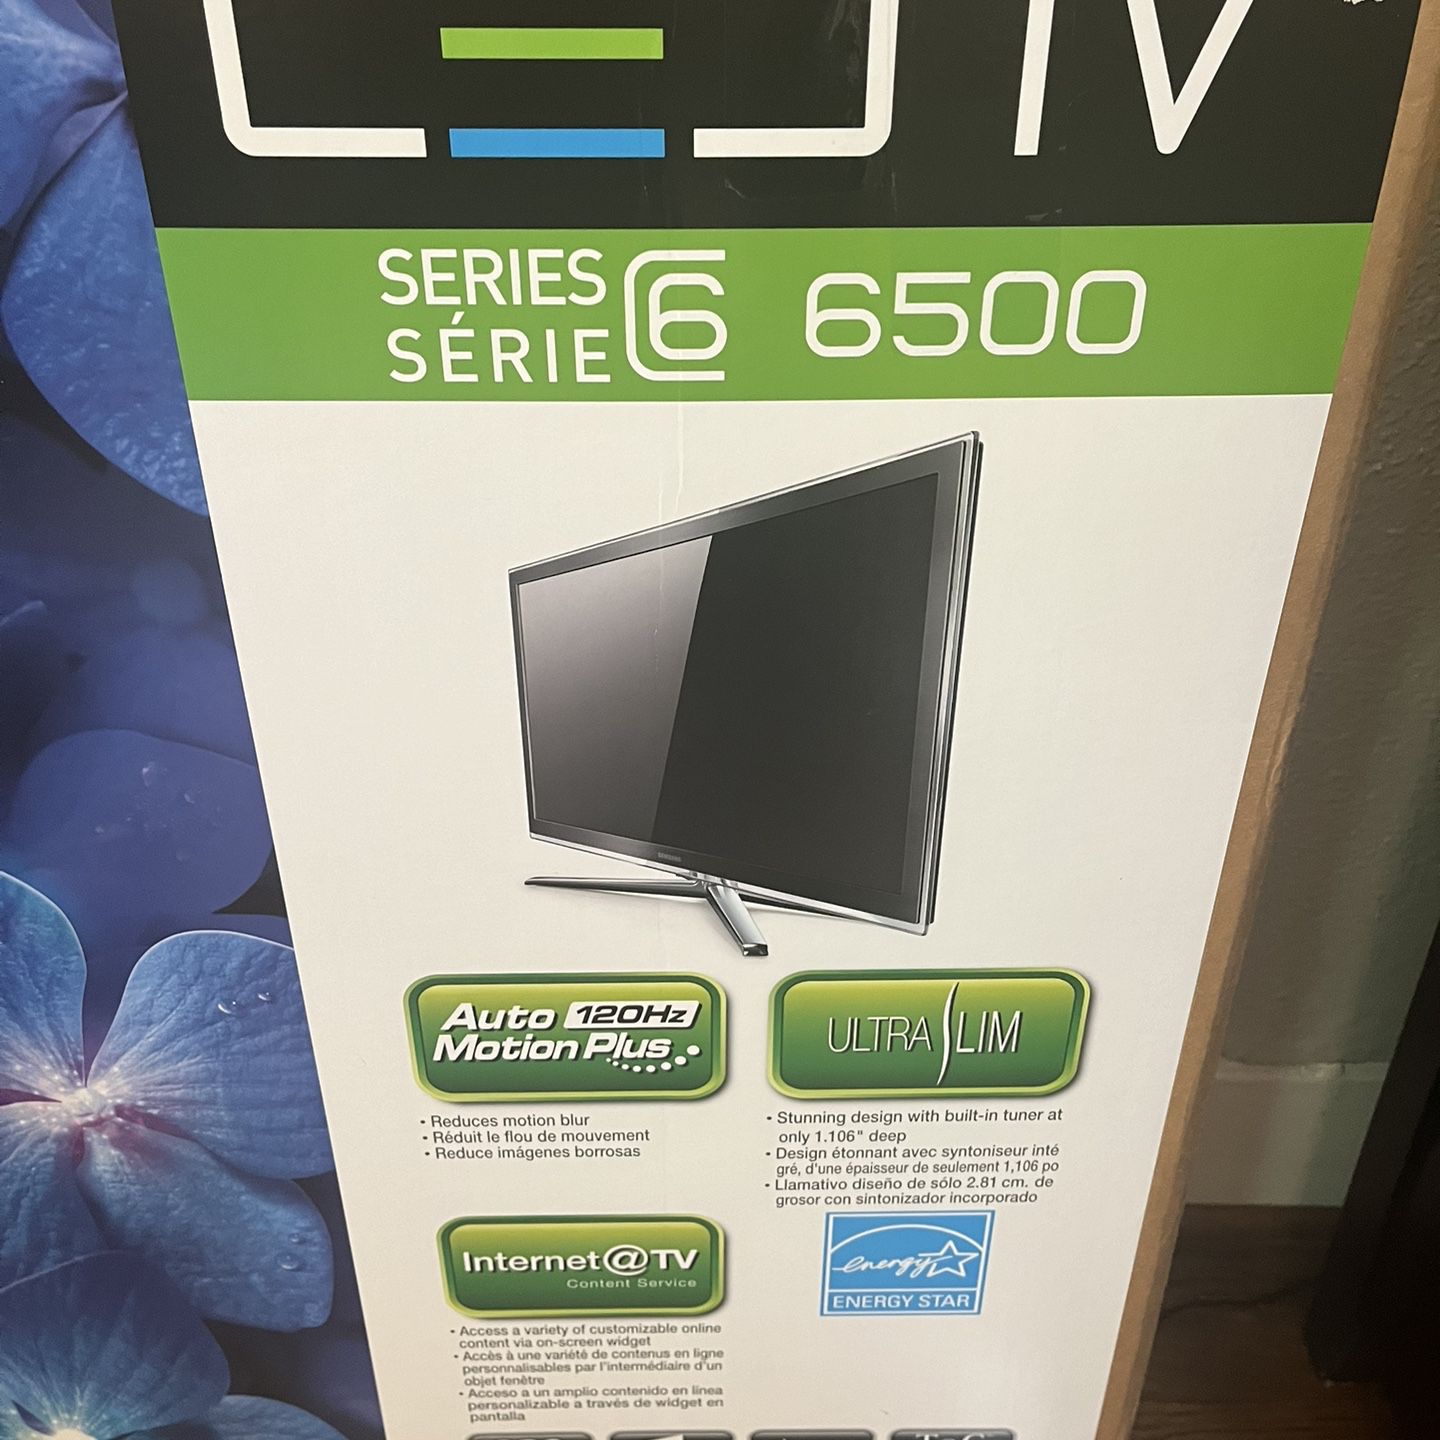 55” Inch Samsung LED TV